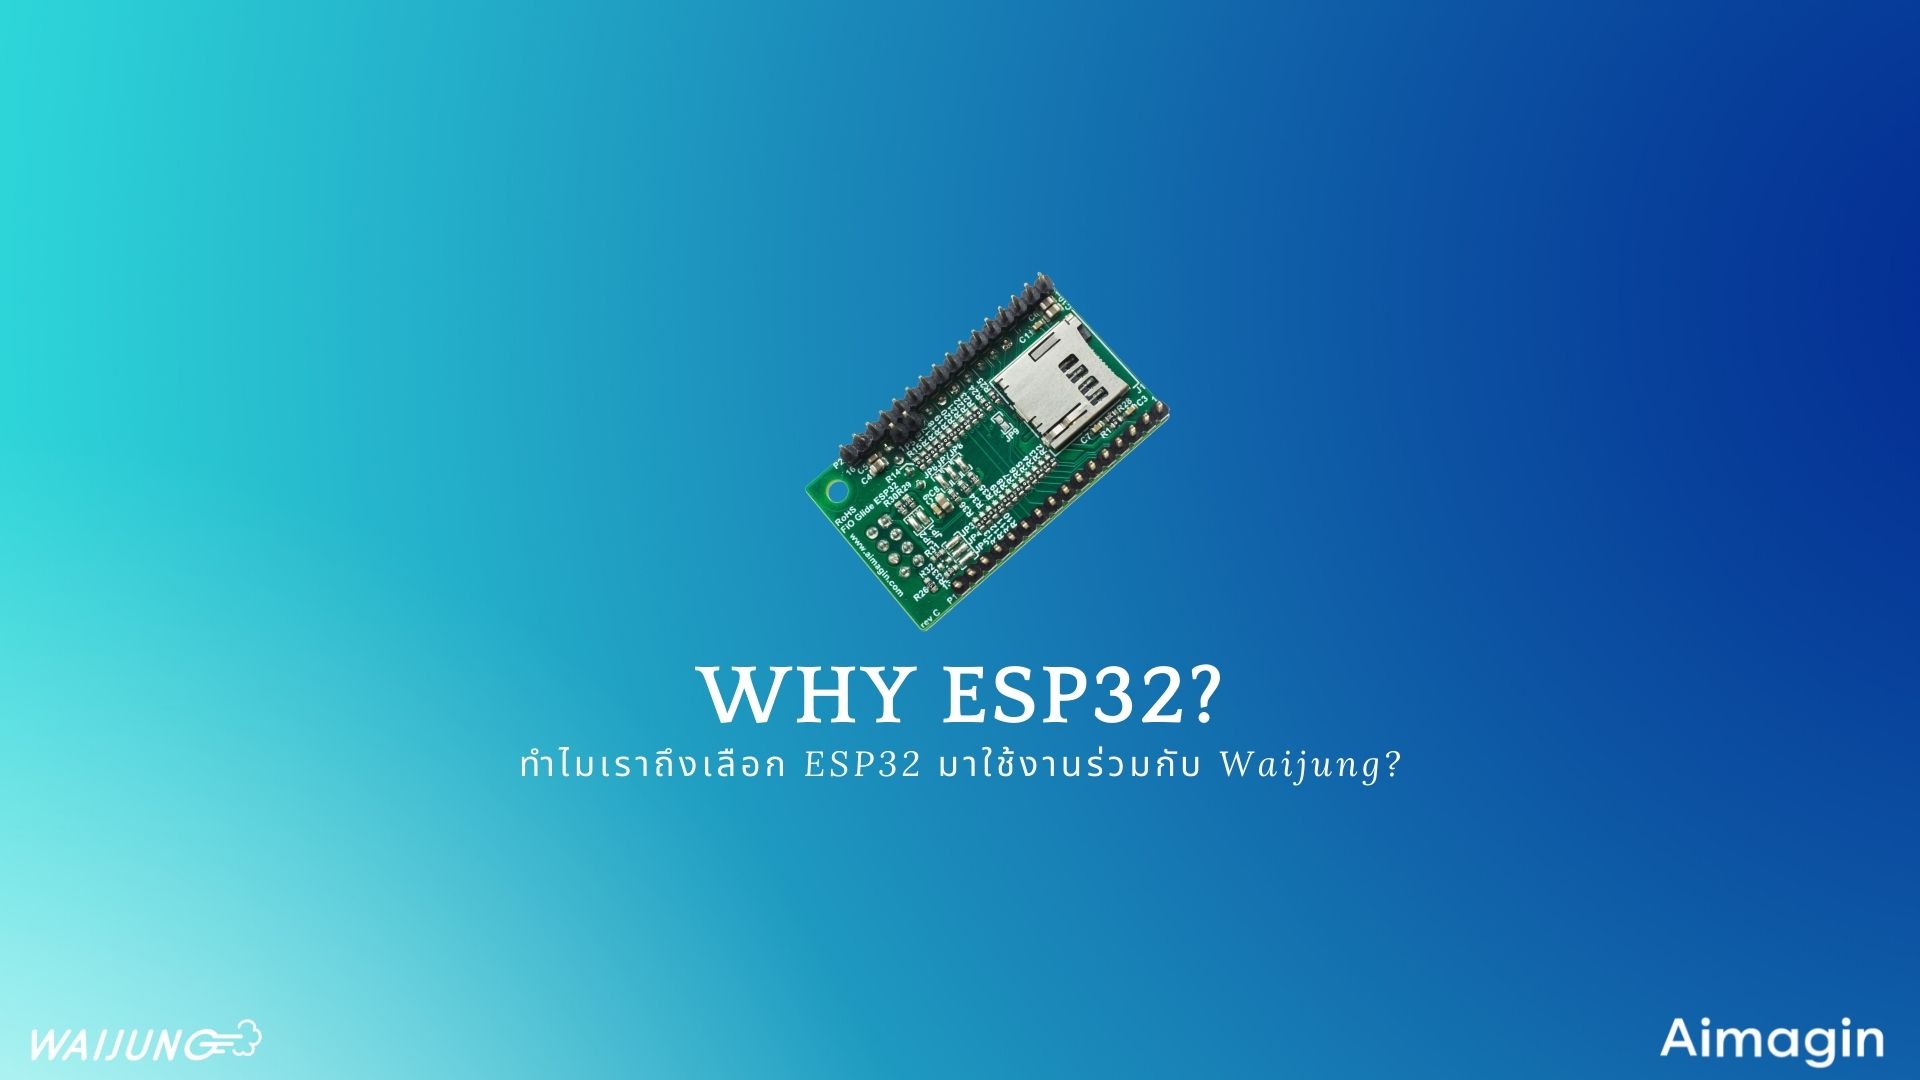 Why ESP32?  ทำไมเราถึงเลือก ESP32 มาใช้งานร่วมกับ Waijung2